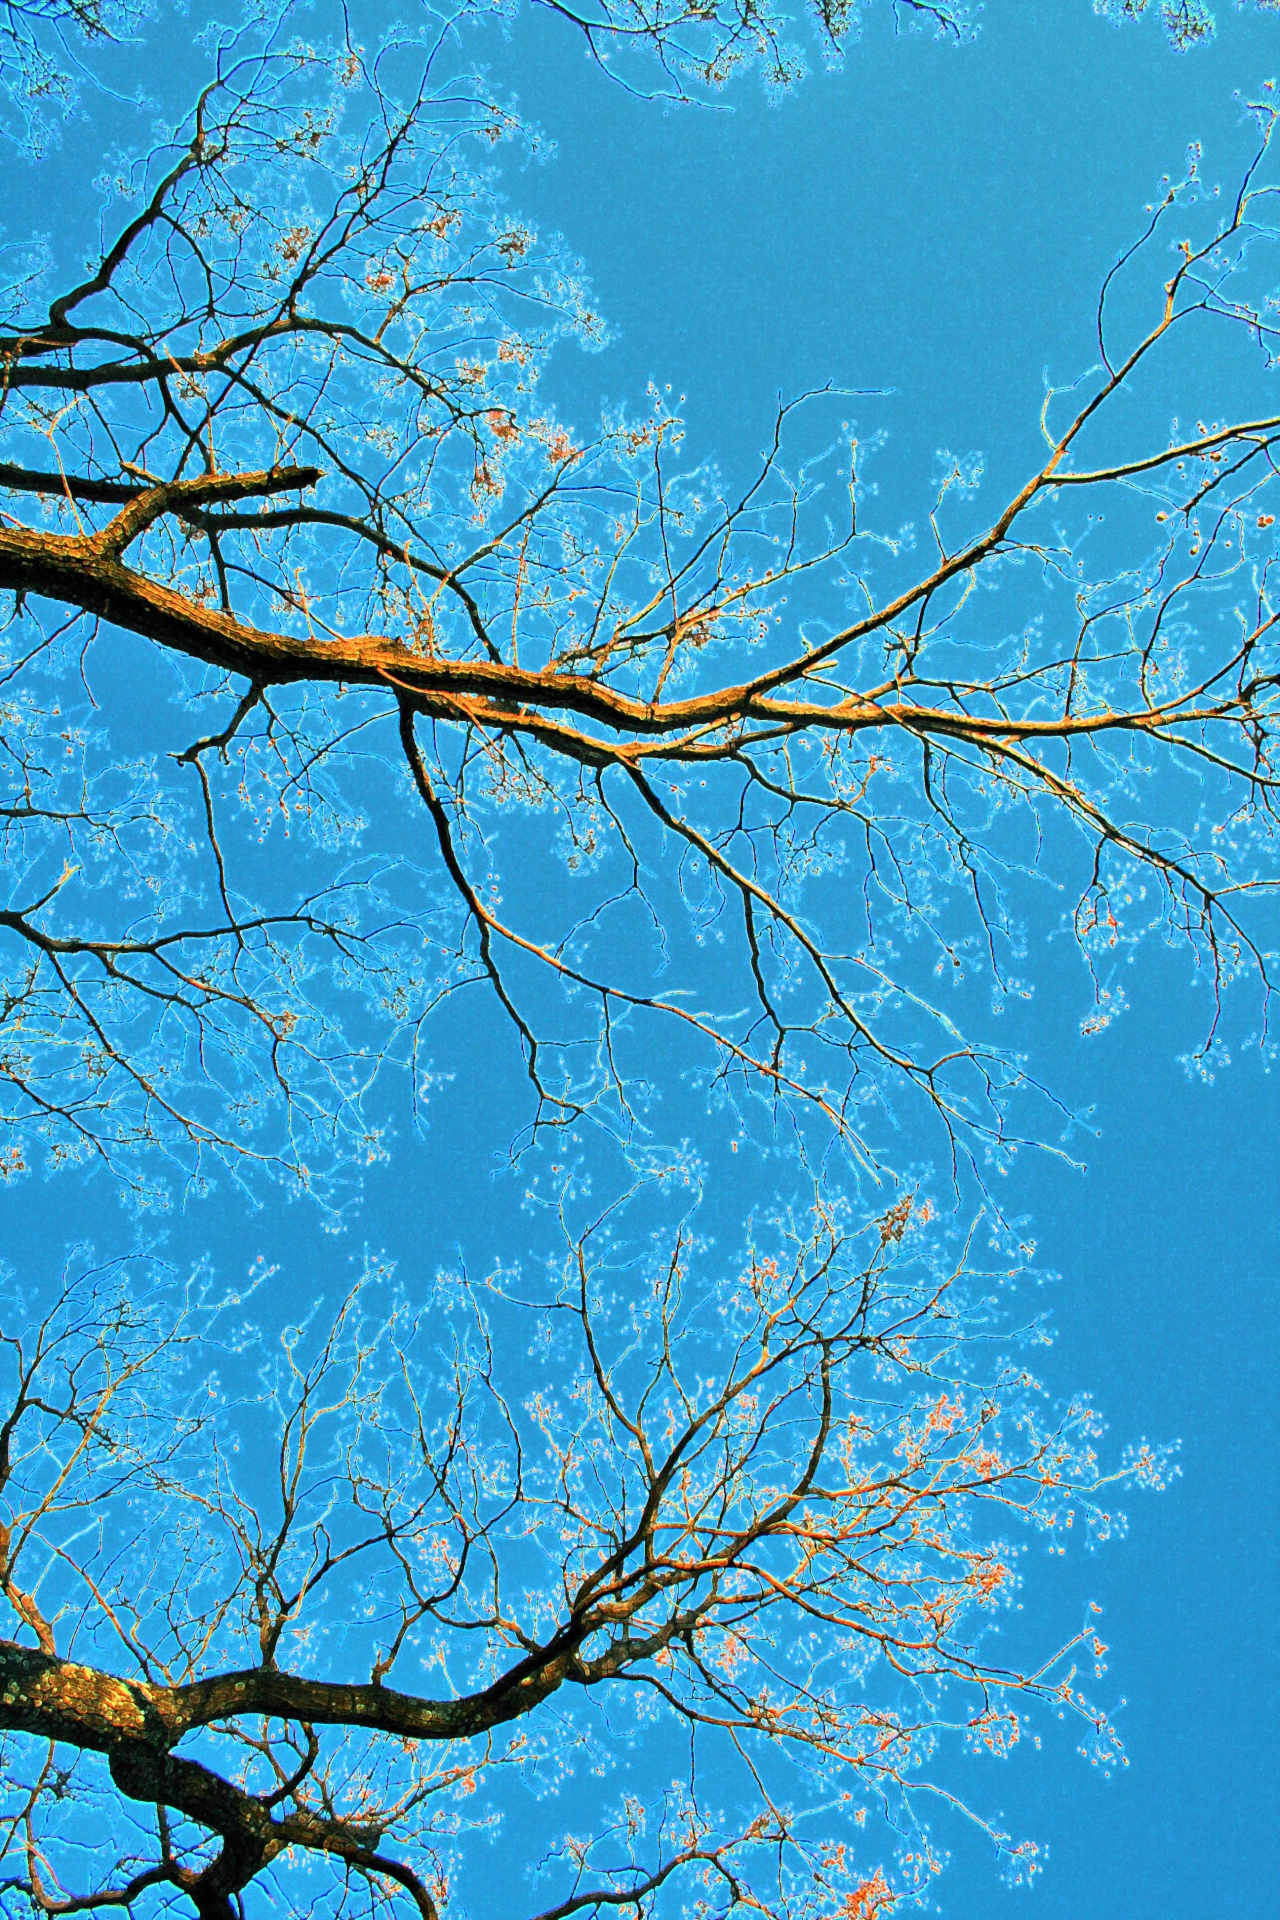 Sky With Syringa Tree Branches